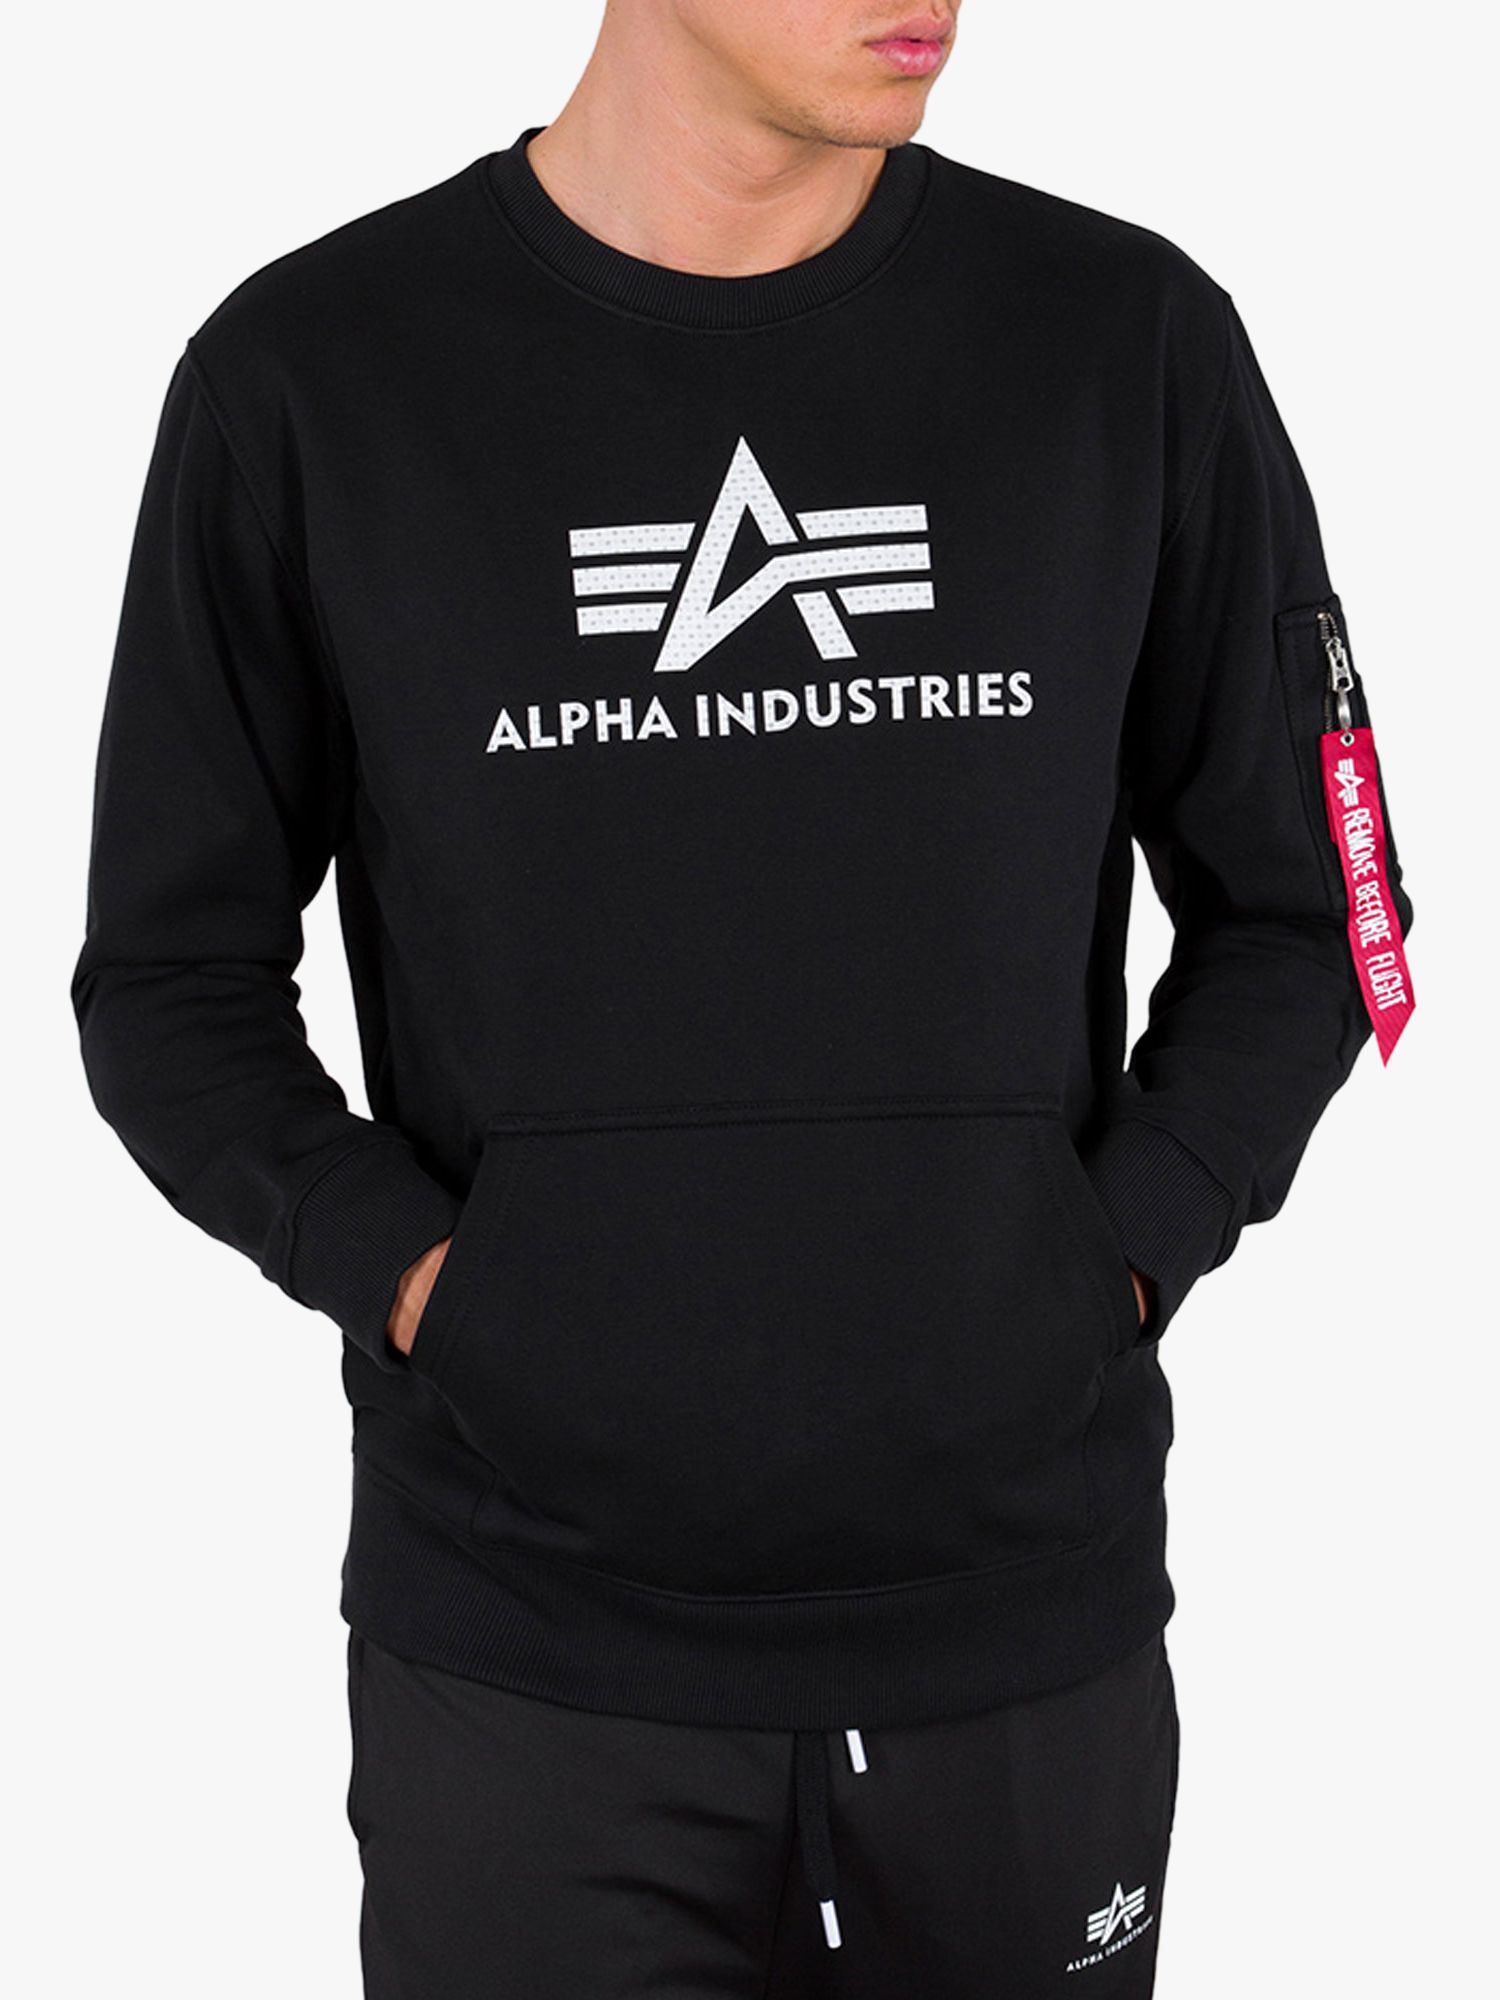 S Logo Black, Sweatshirt, Industries Alpha 3D